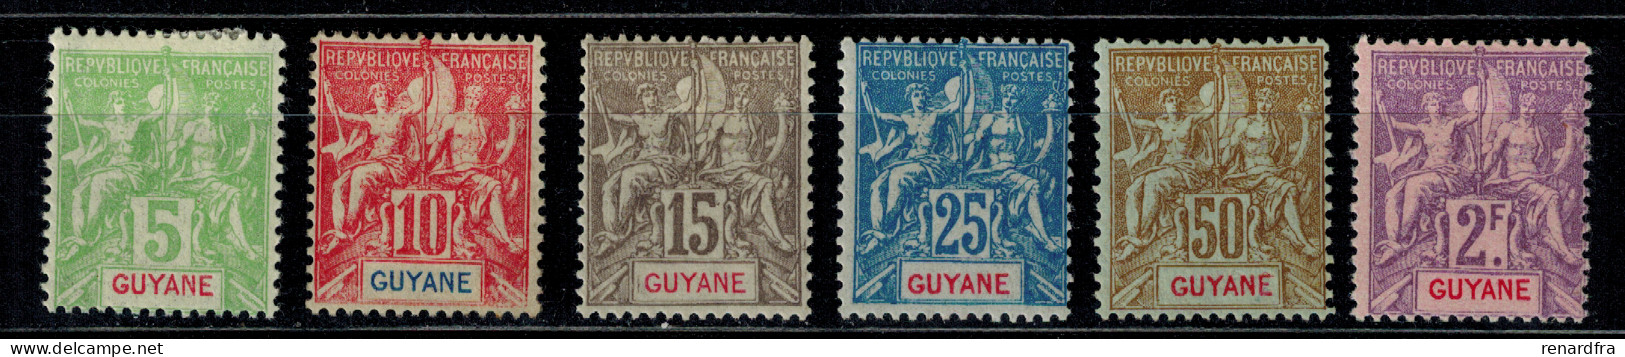 Timbres De Guyane N° 43, 44, 45, 46, 47, 48 Neuf * / MH - Nuovi